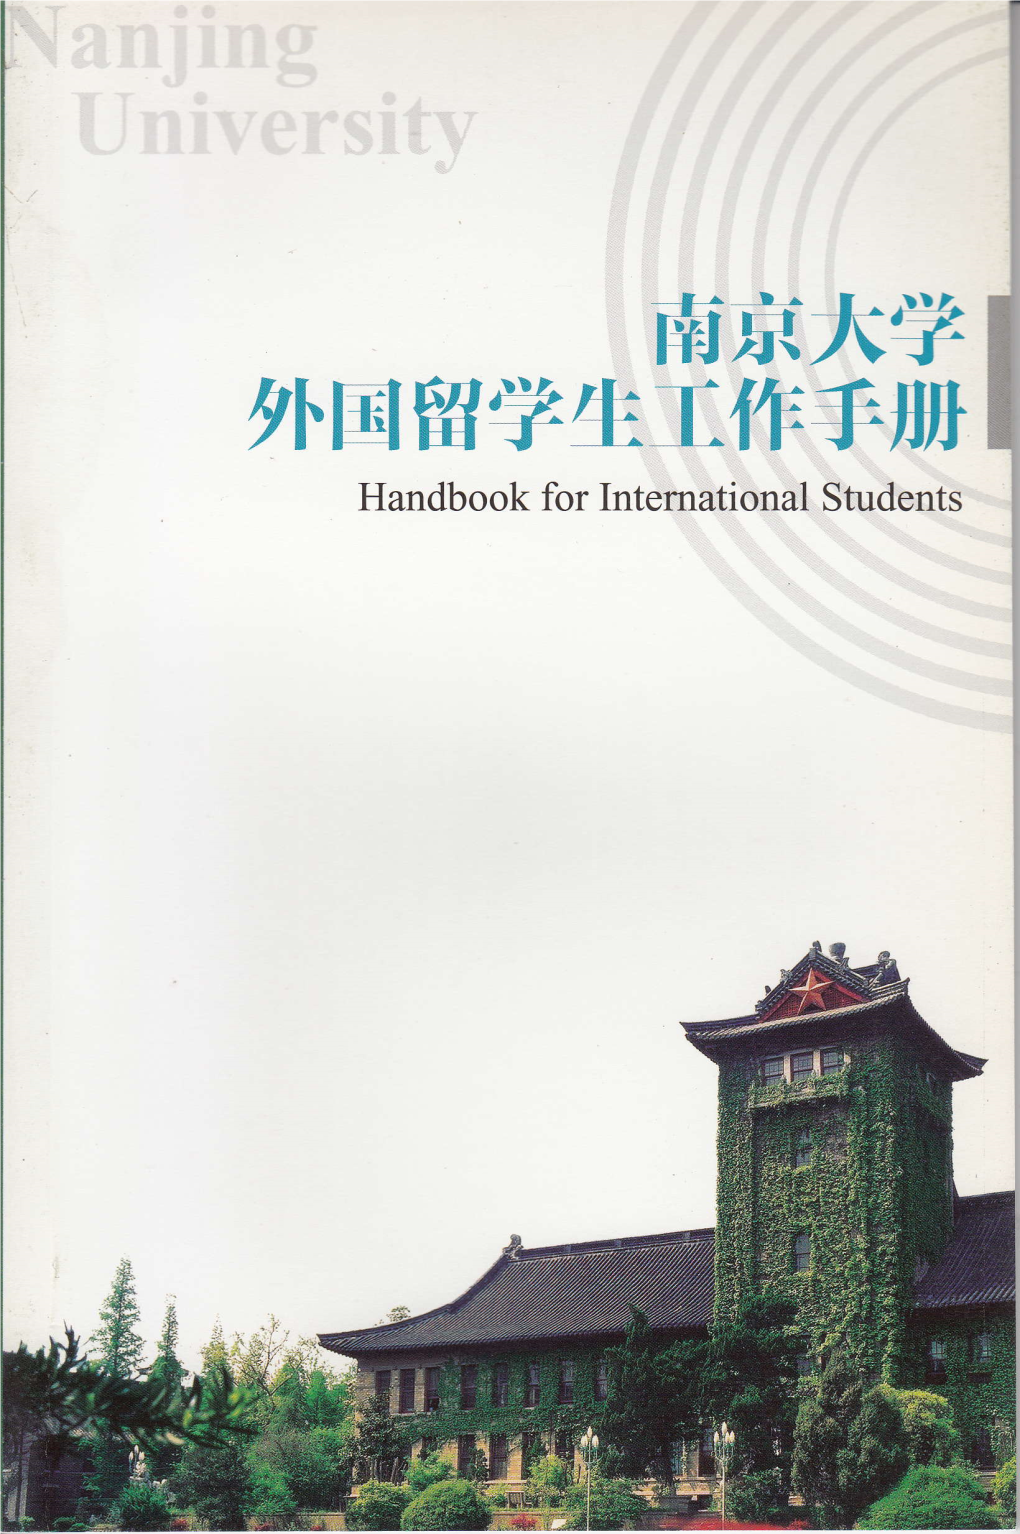 Handbook for International Students of NJU